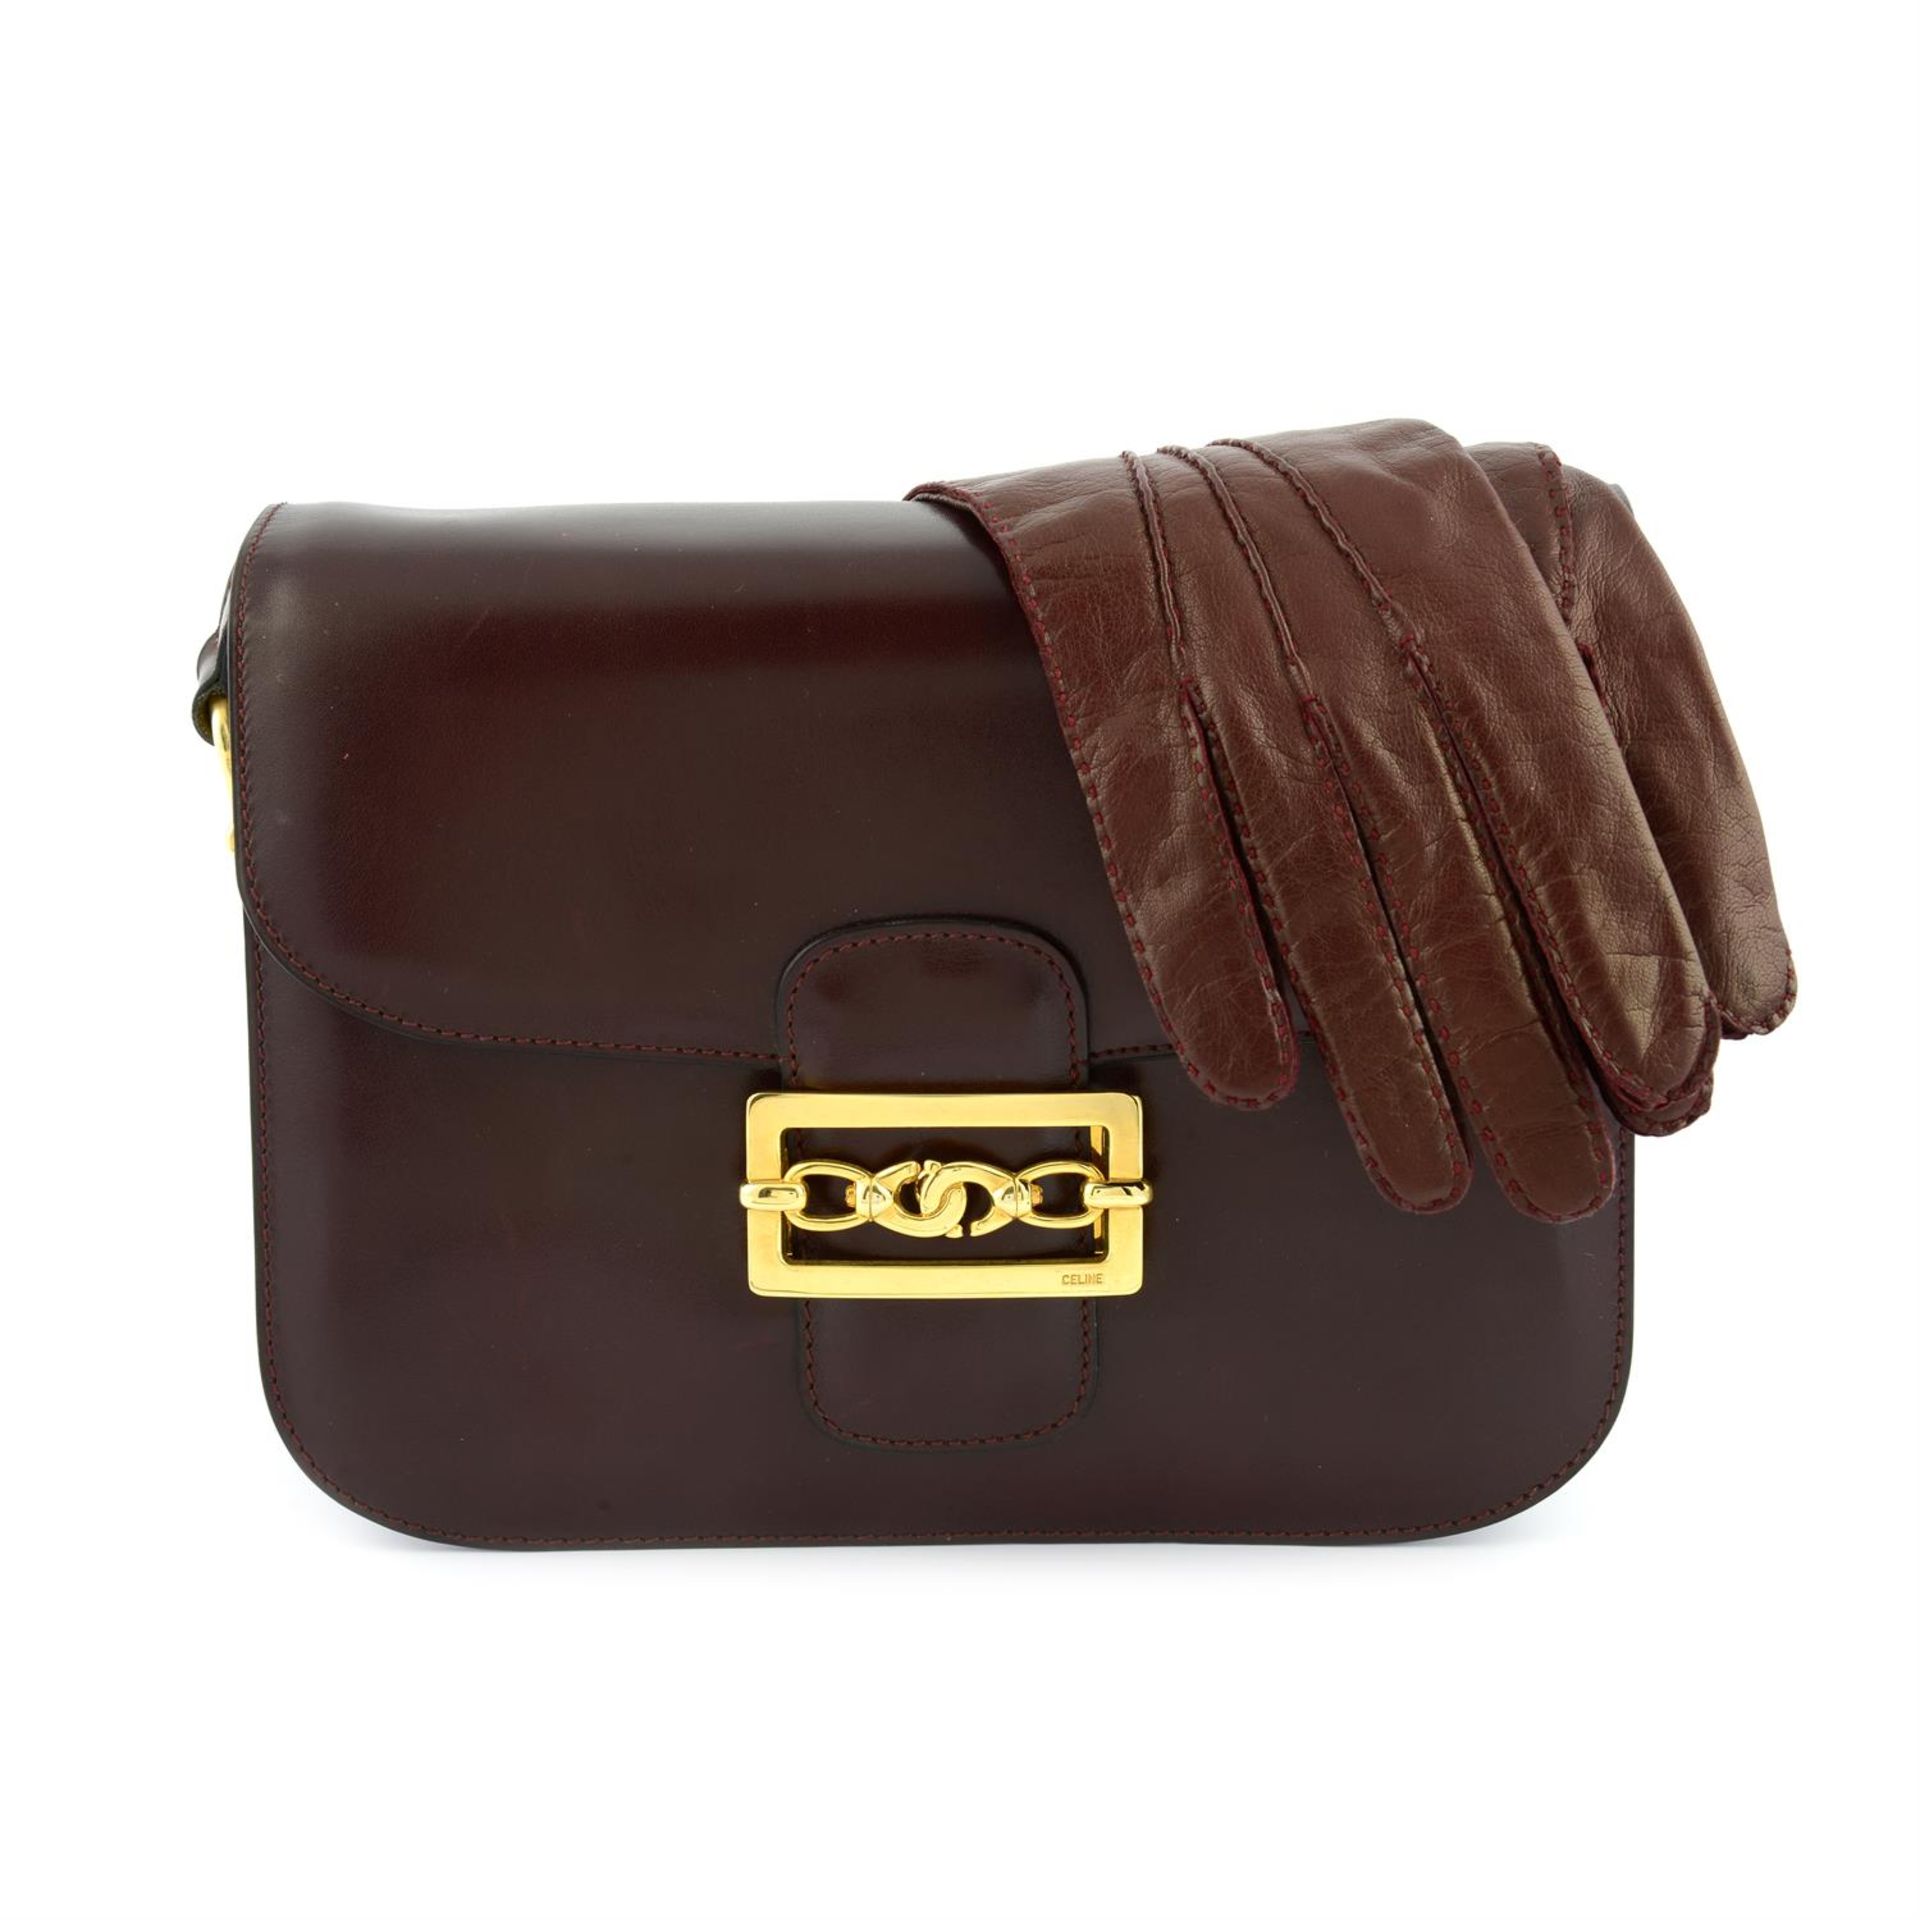 CÉLINE - a burgundy leather shoulder bag and matching leather gloves.